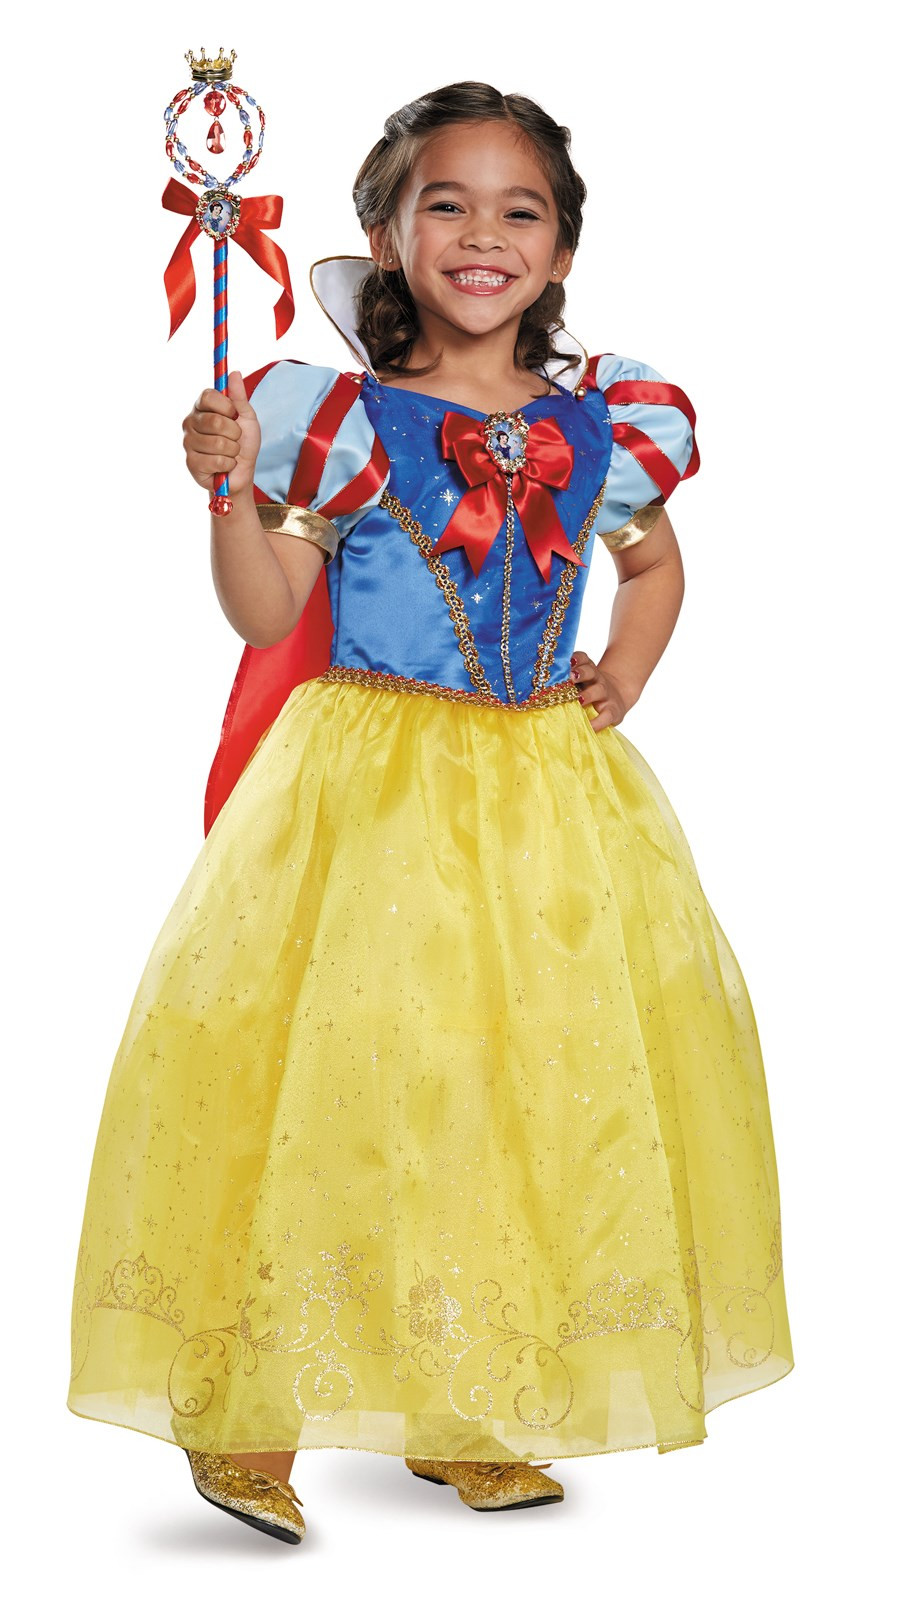 DIY Snow White Costume Toddler
 Disney Storybook Snow White Prestige Child Toddler